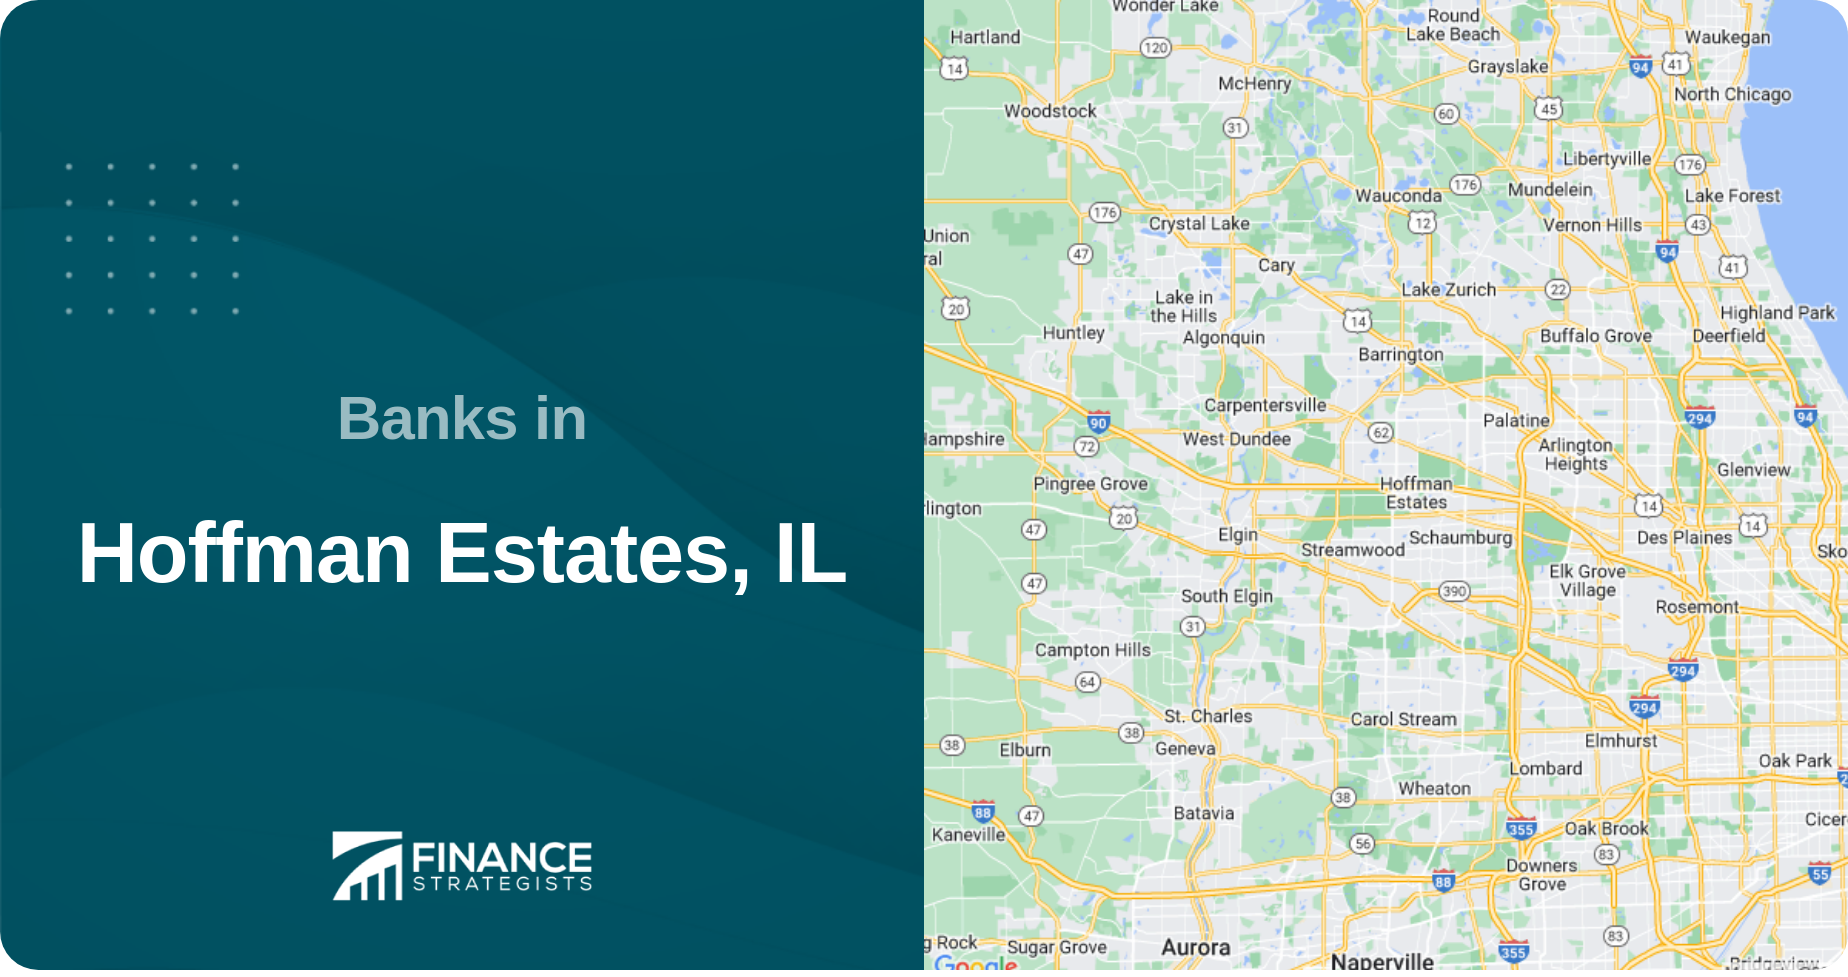 Banks in Hoffman Estates, IL